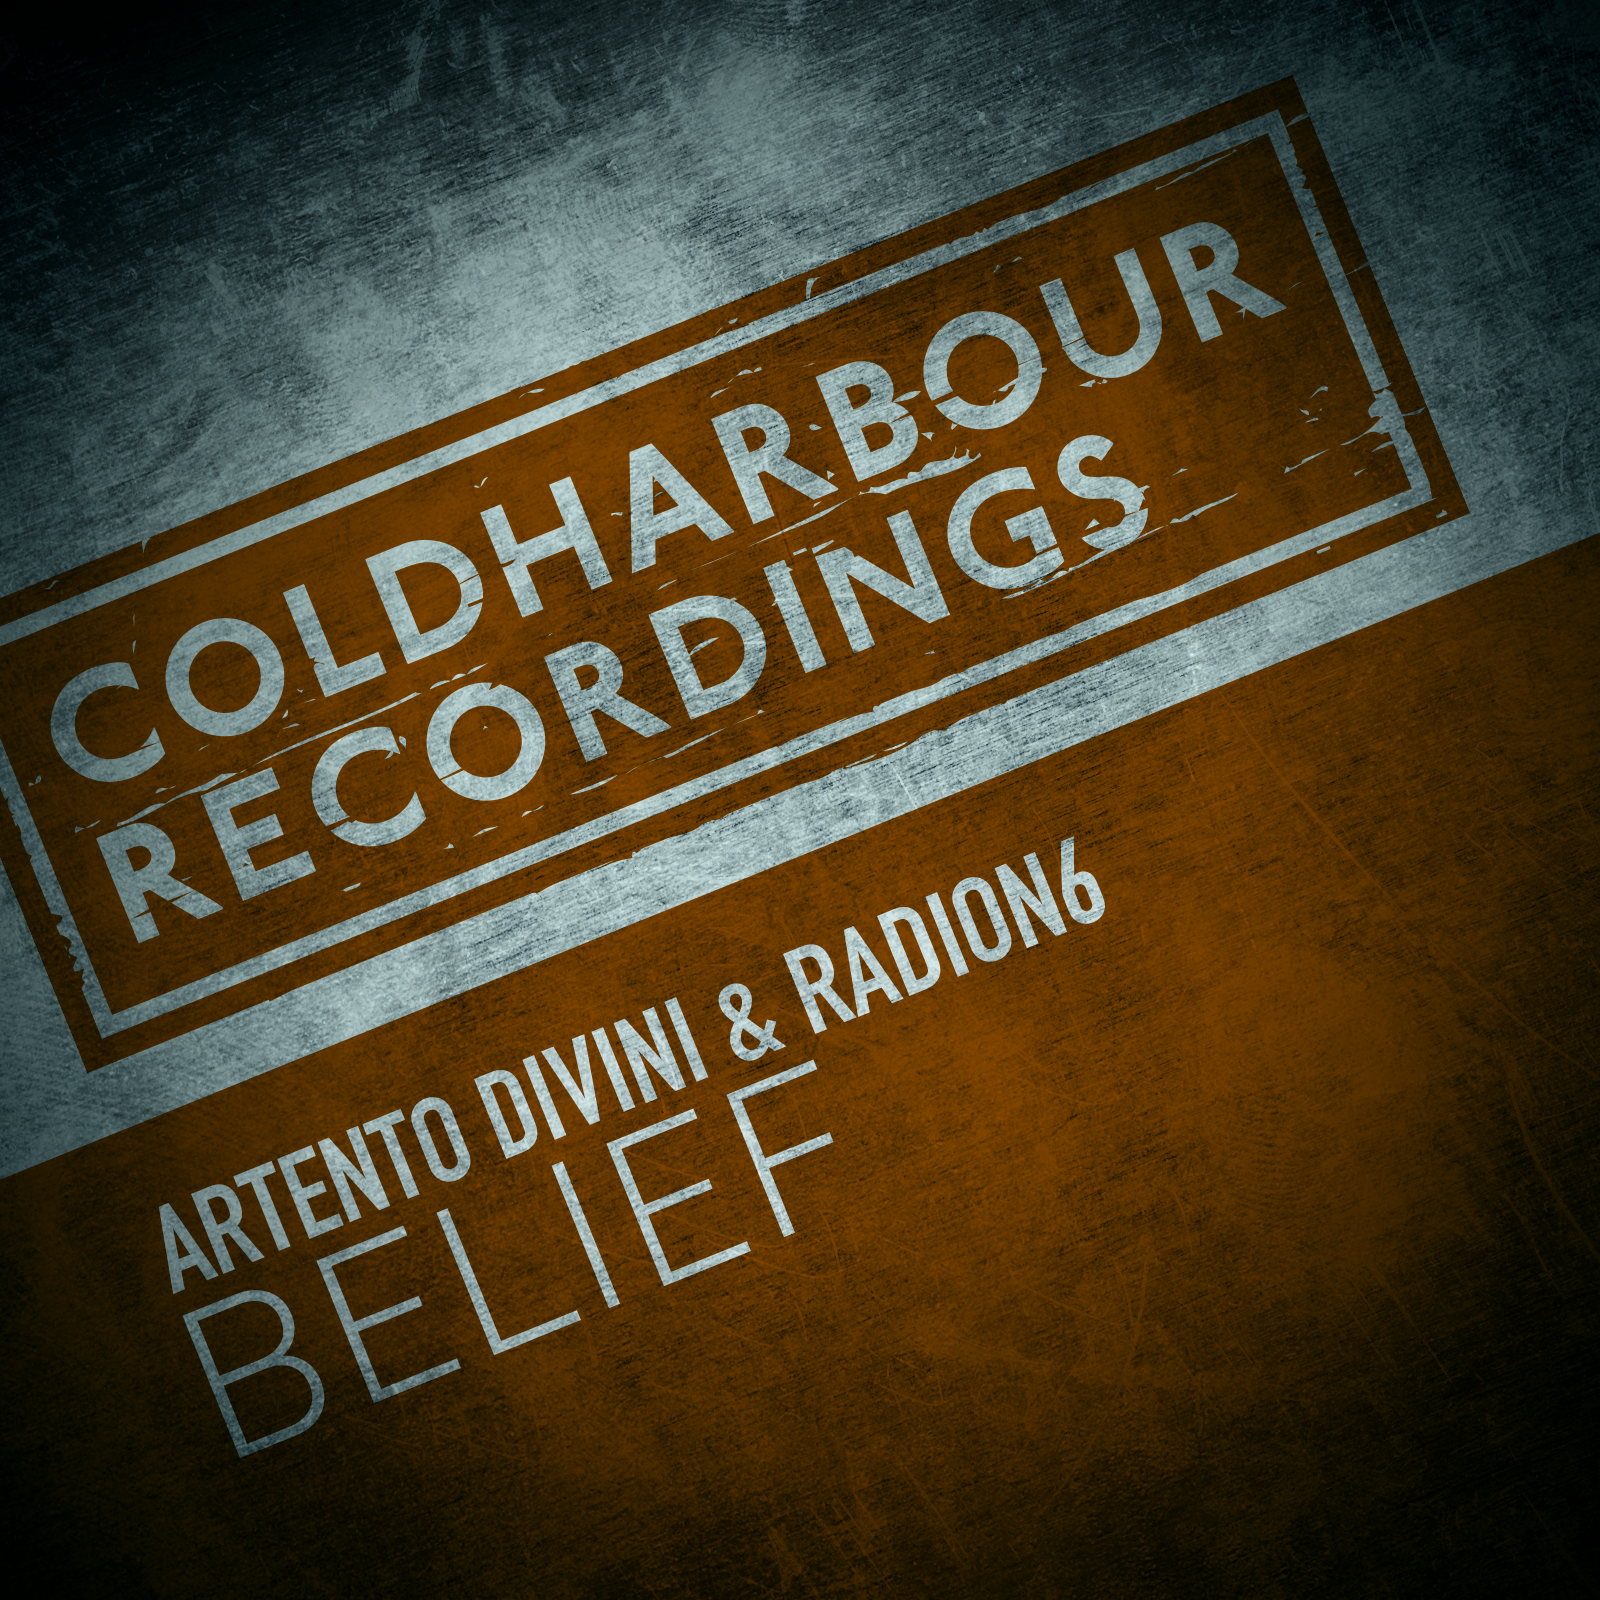 OUT NOW: ARTENTO DIVINI & RADION6 – BELIEF [Coldharbour Recordings]